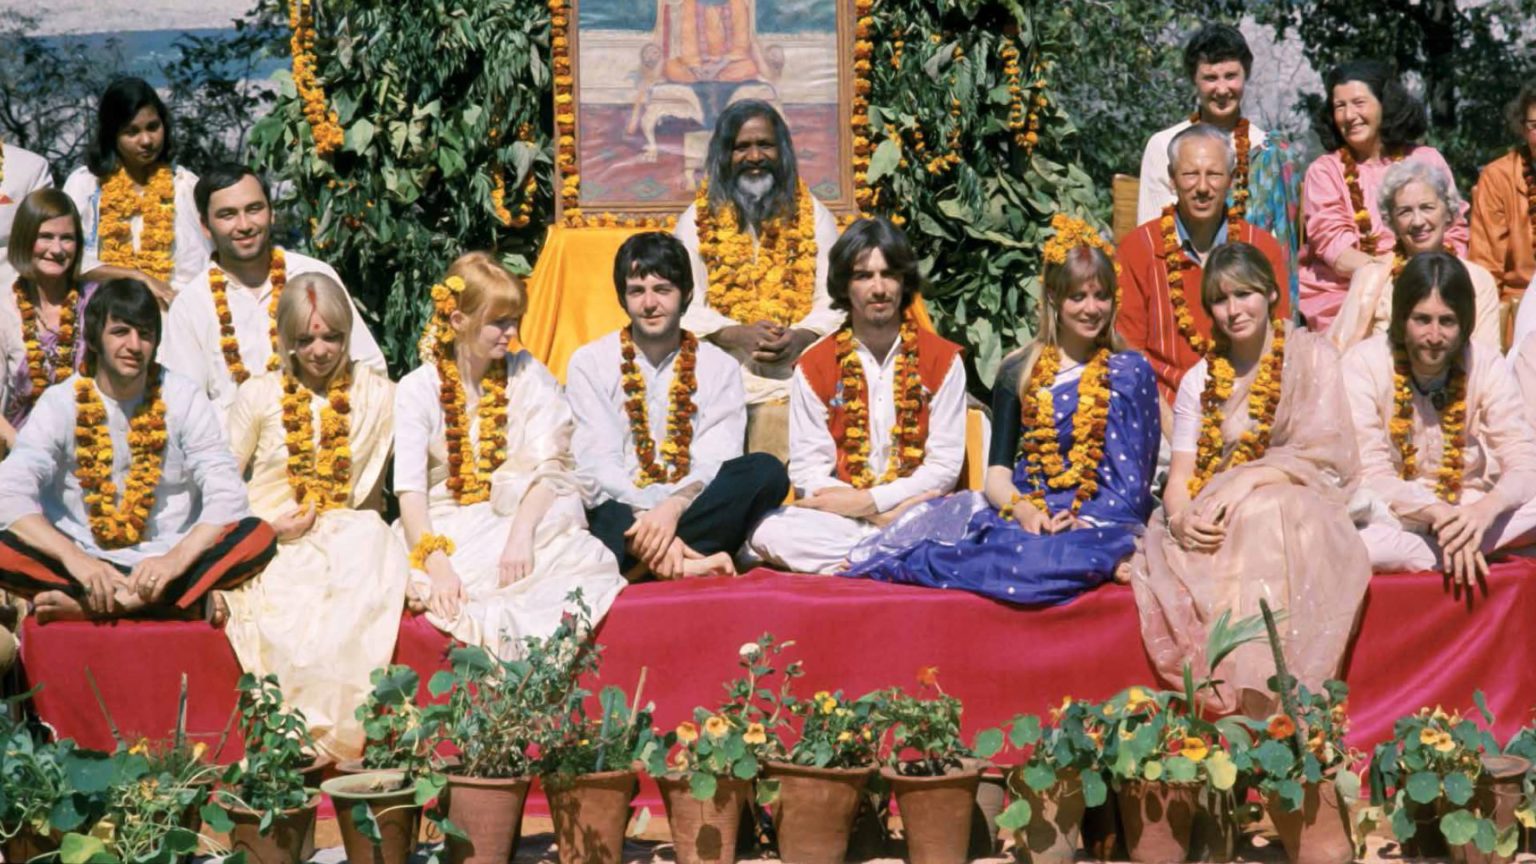 Los Beatles en la India: del ‘White Album’ al universo de Ravi Shankar